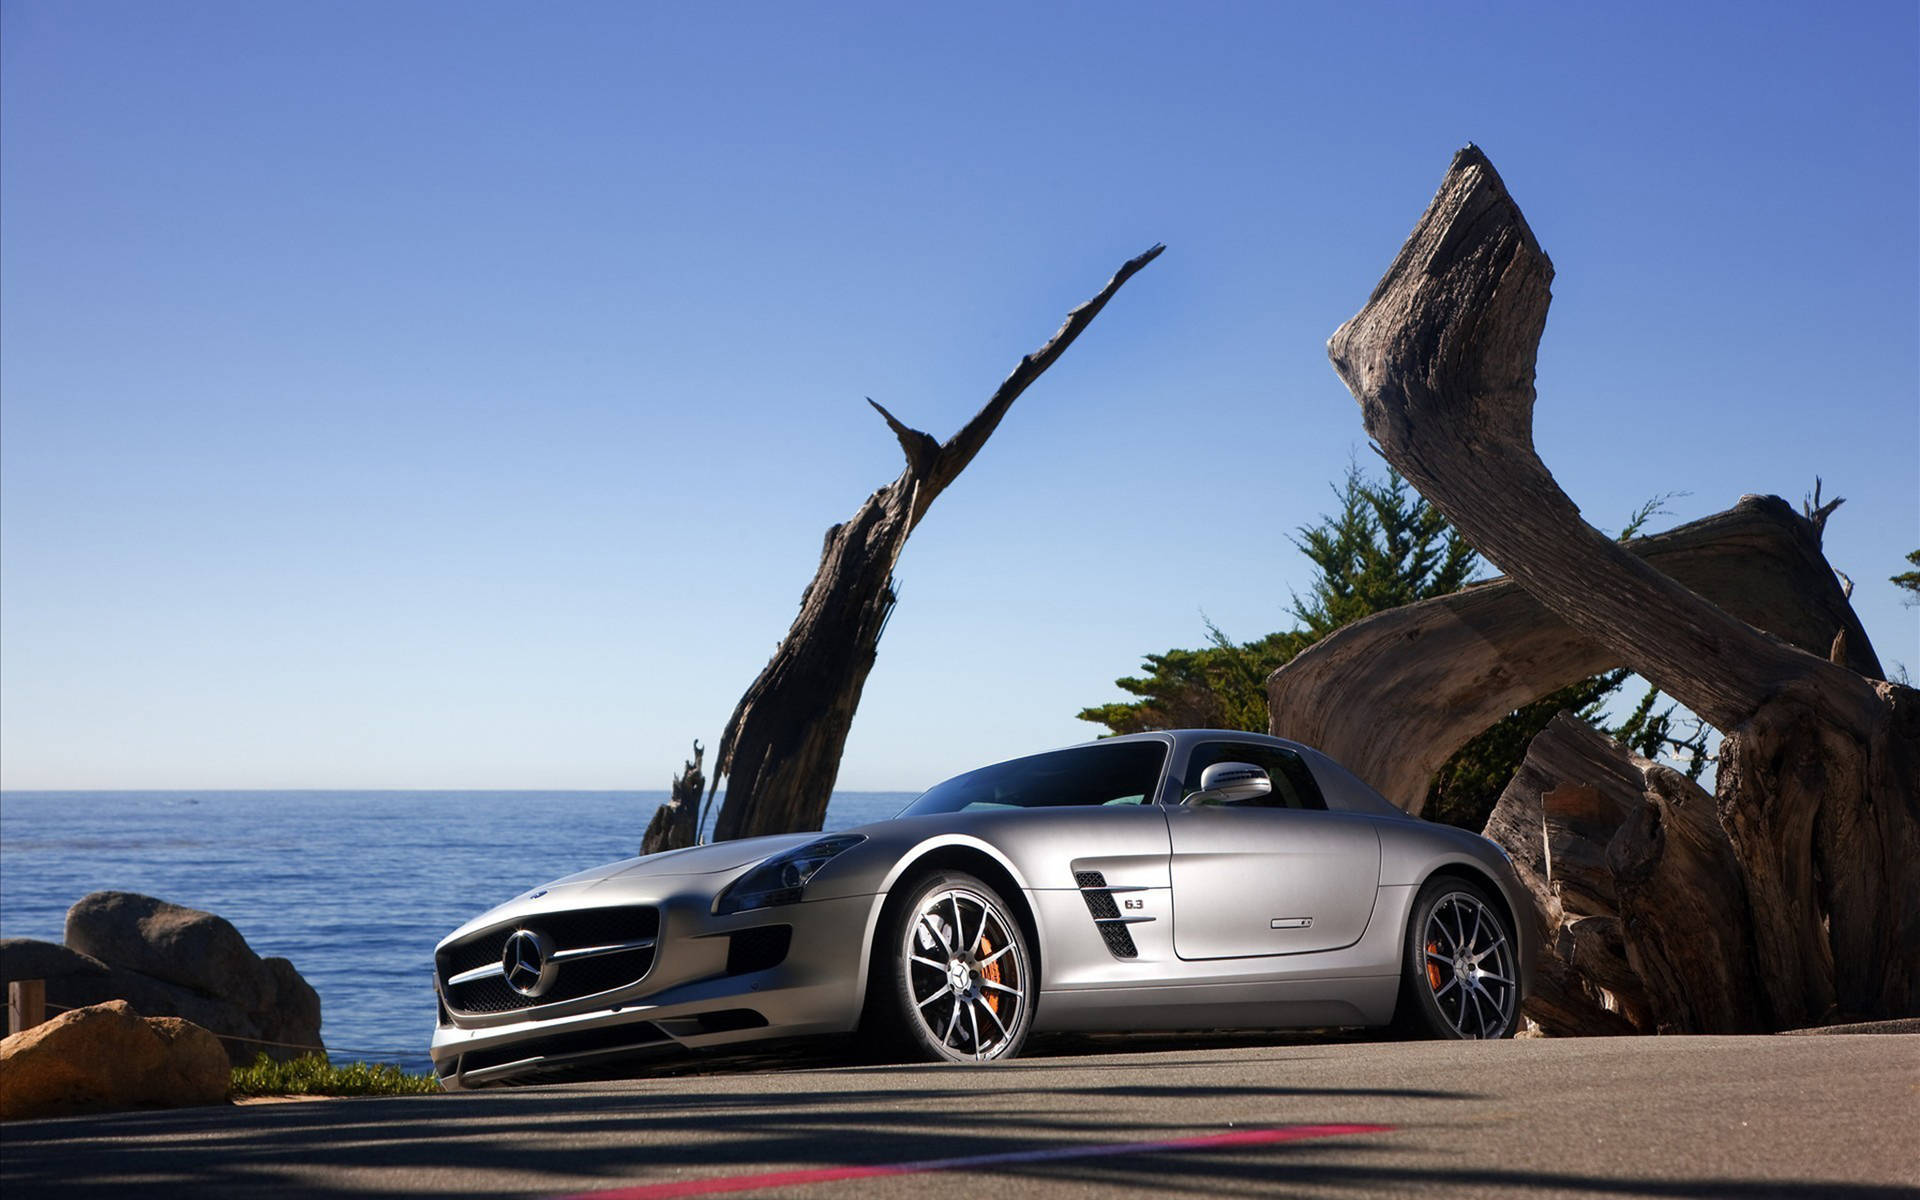 Caption: Sleek Mercedes-benz - The Epitome Of Luxury Background